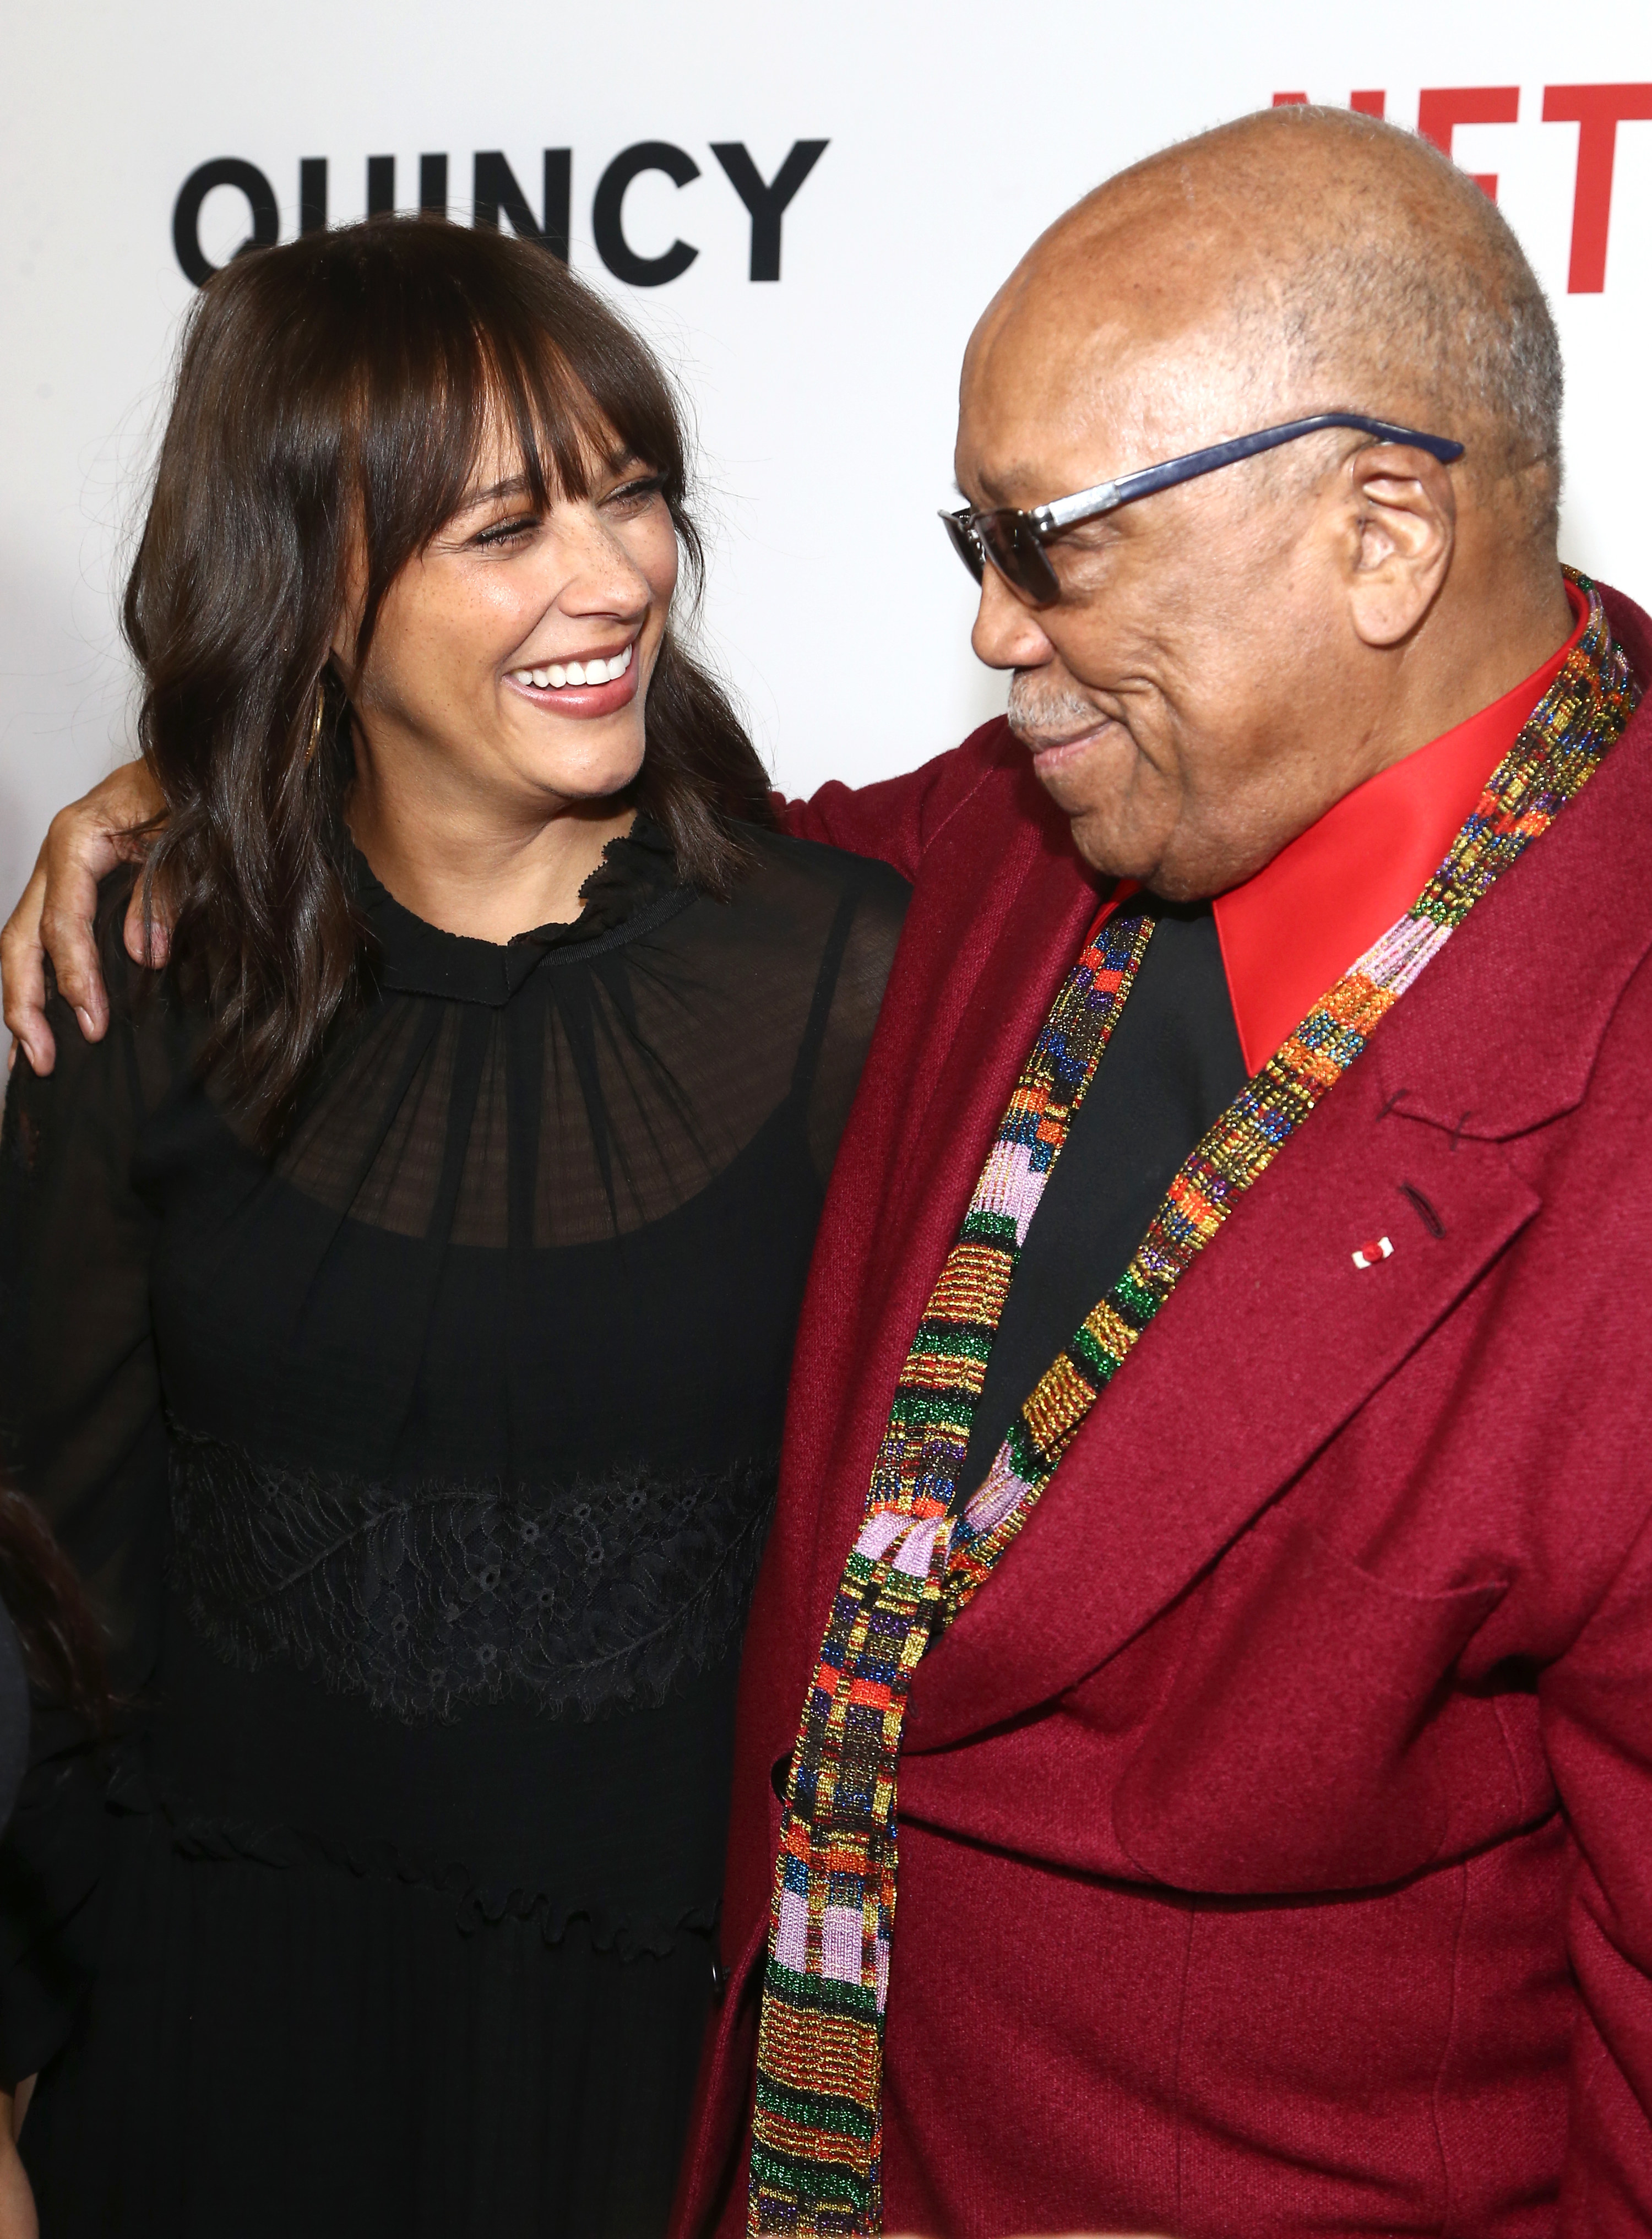 Rashida Jones and Quincy Jones smiling at each other